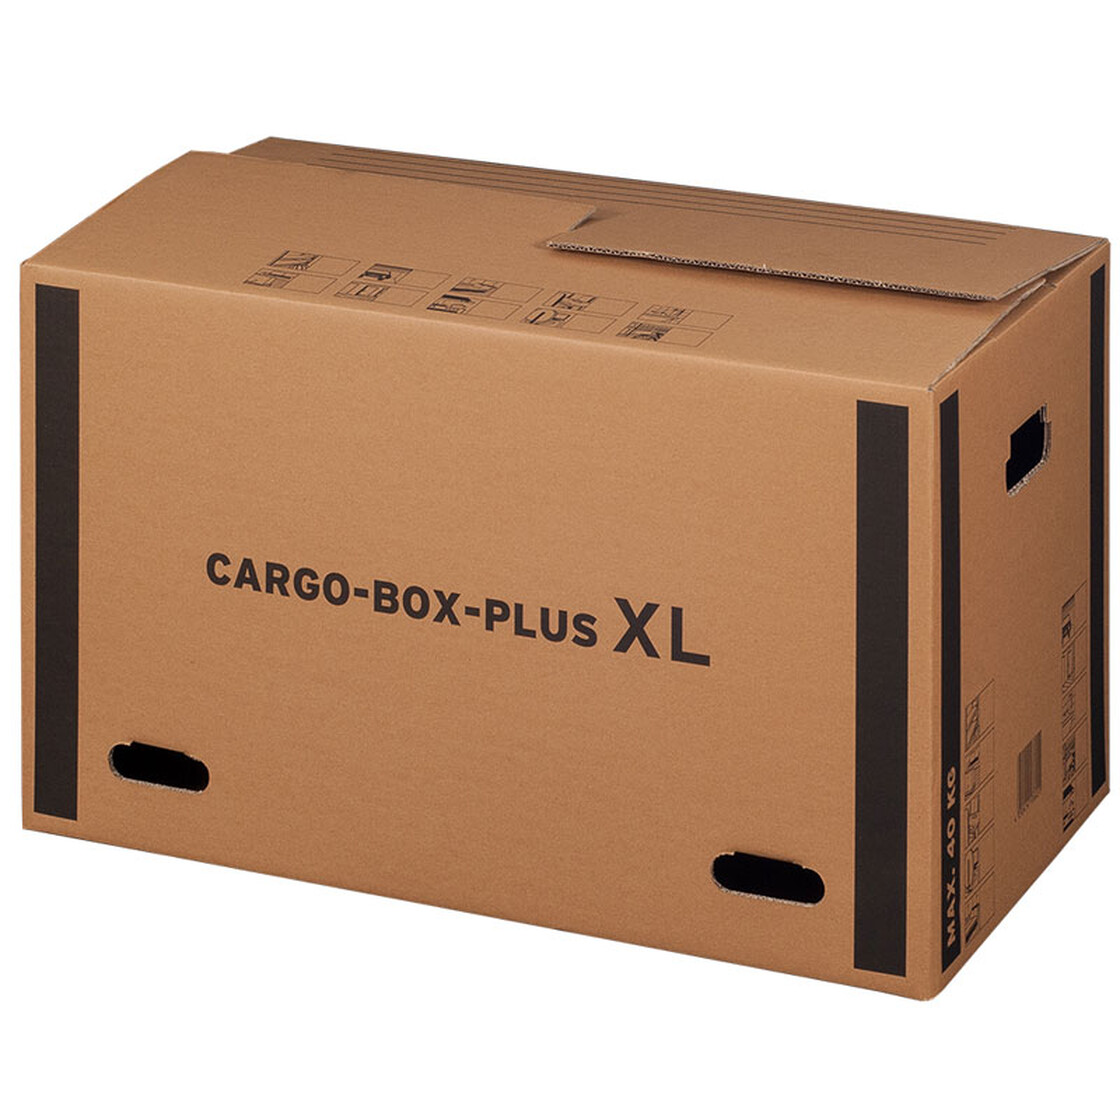 750x420x440 mm CargoBox - XL - Profesionel 2-wellig - spree-karton.sh, 5,84  €